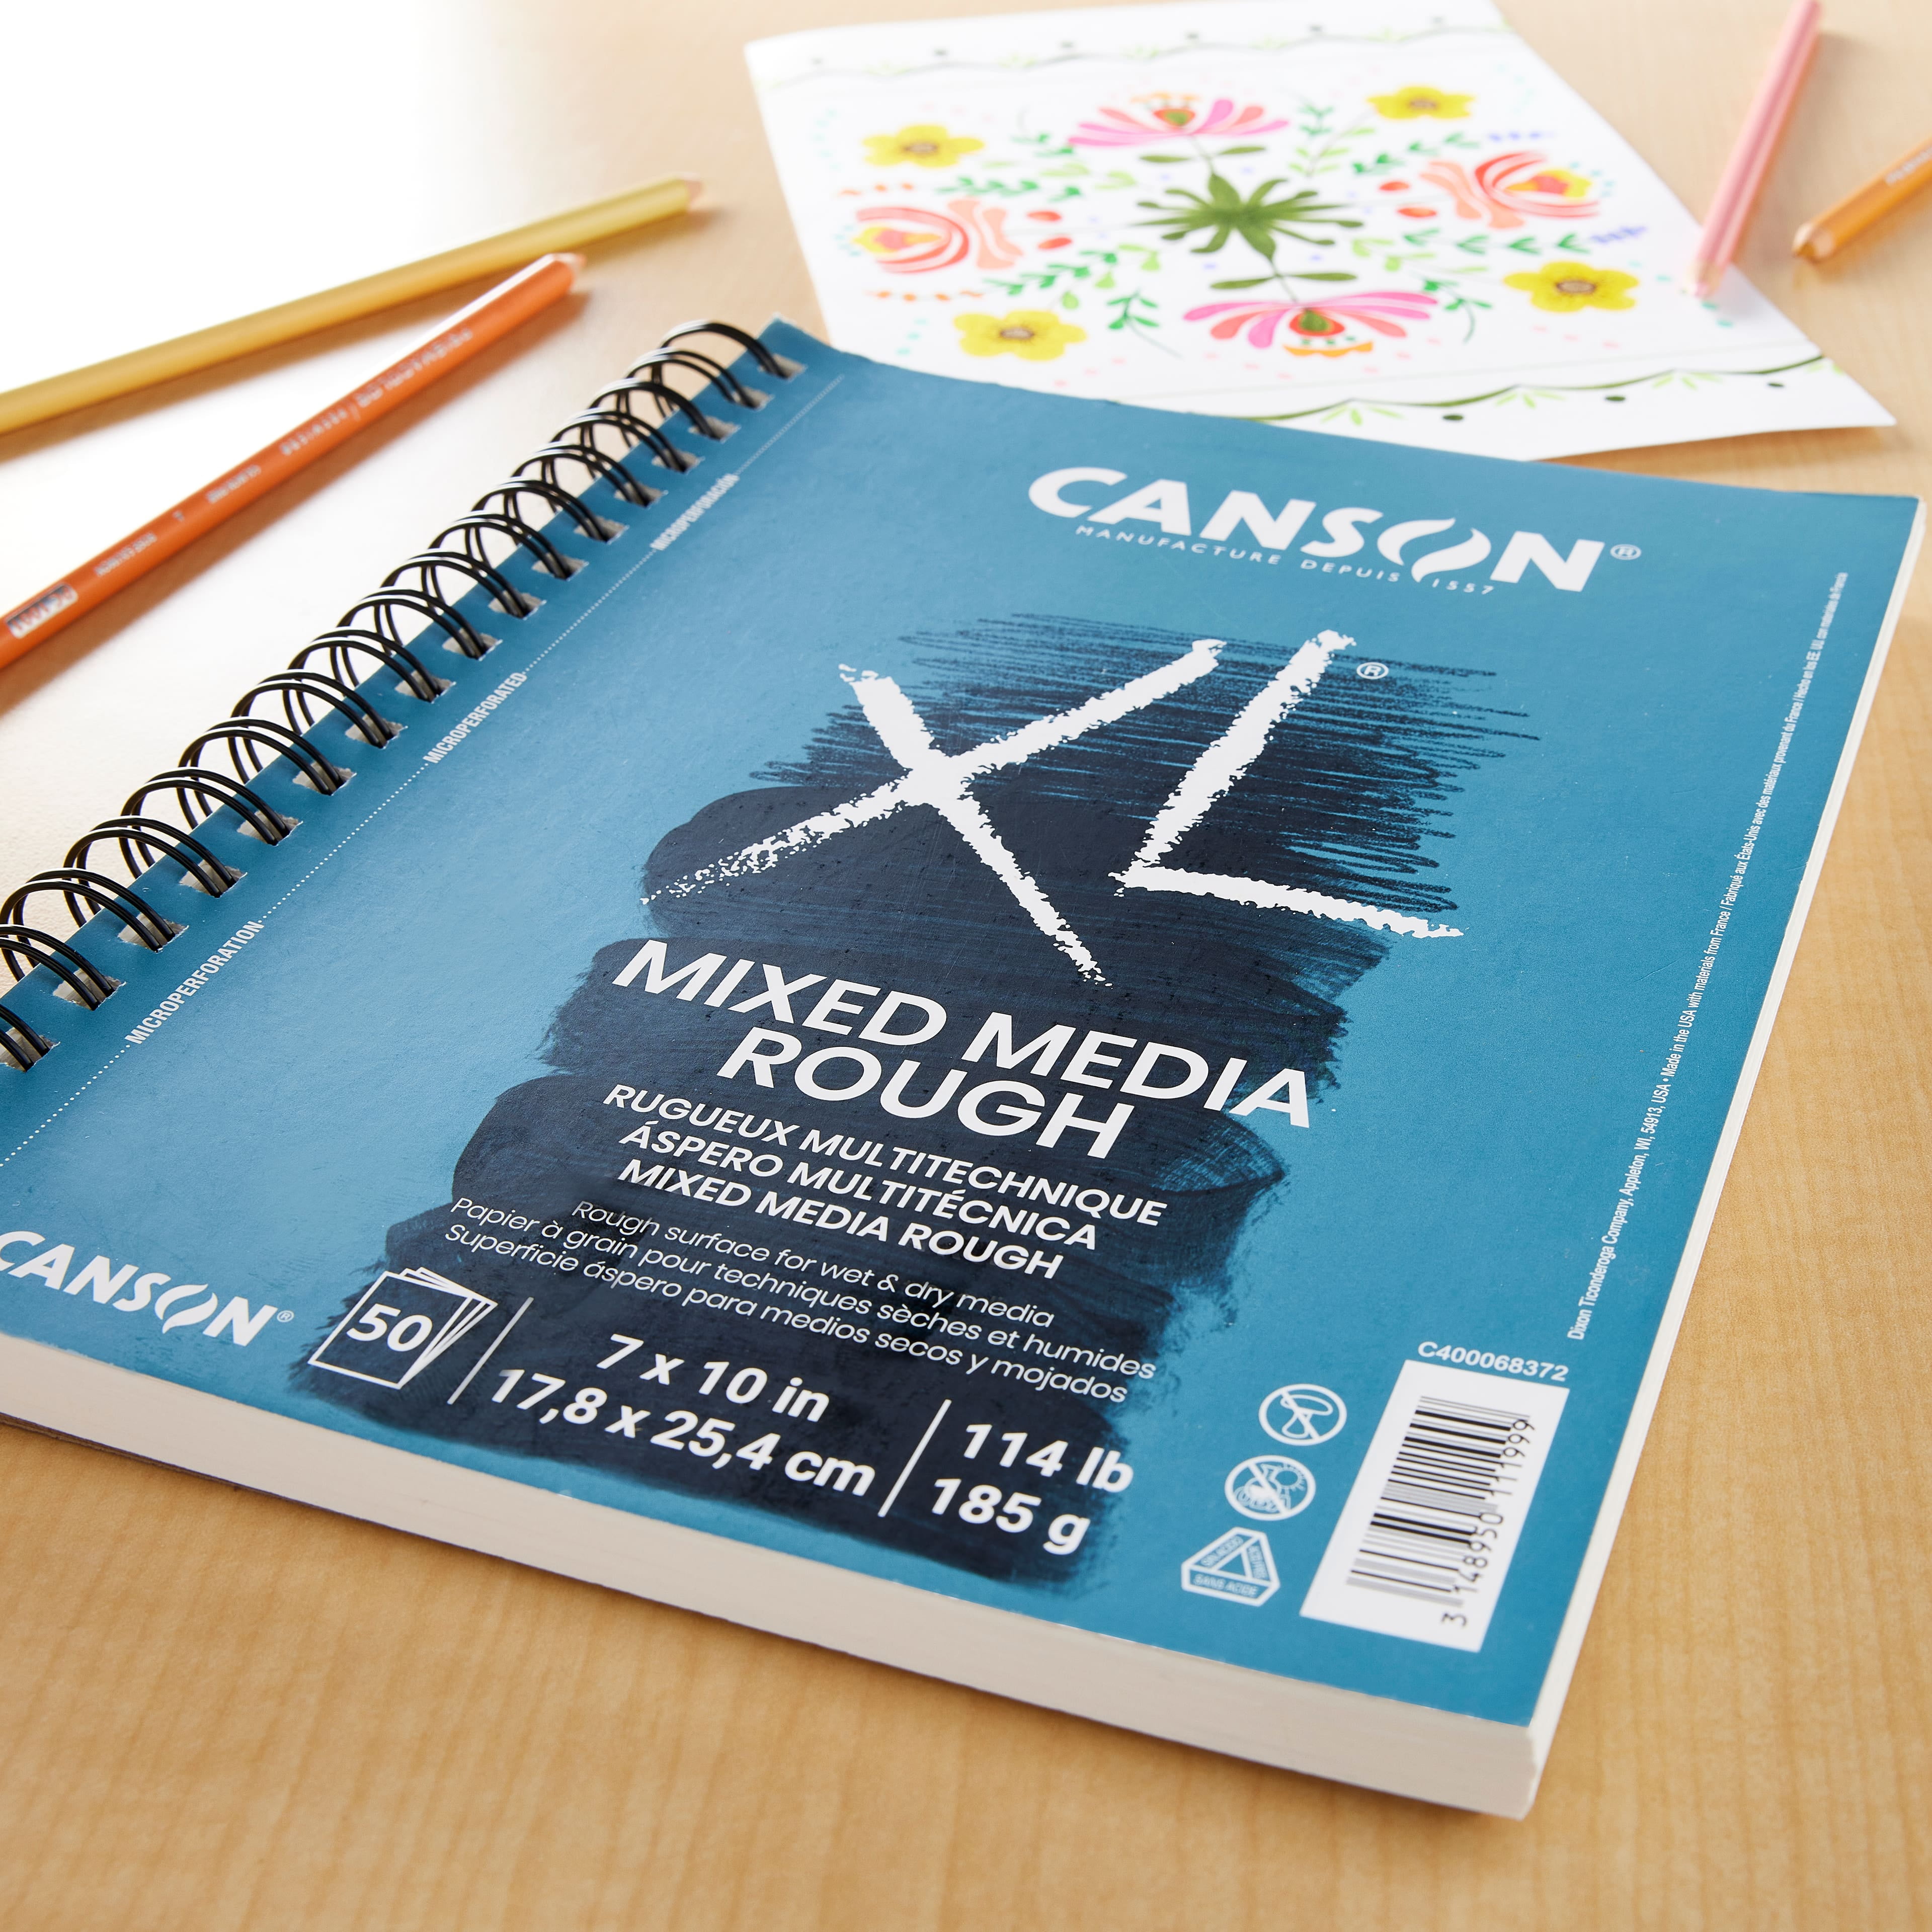 Canson XL Mix Media Pad - Meininger Art Supply